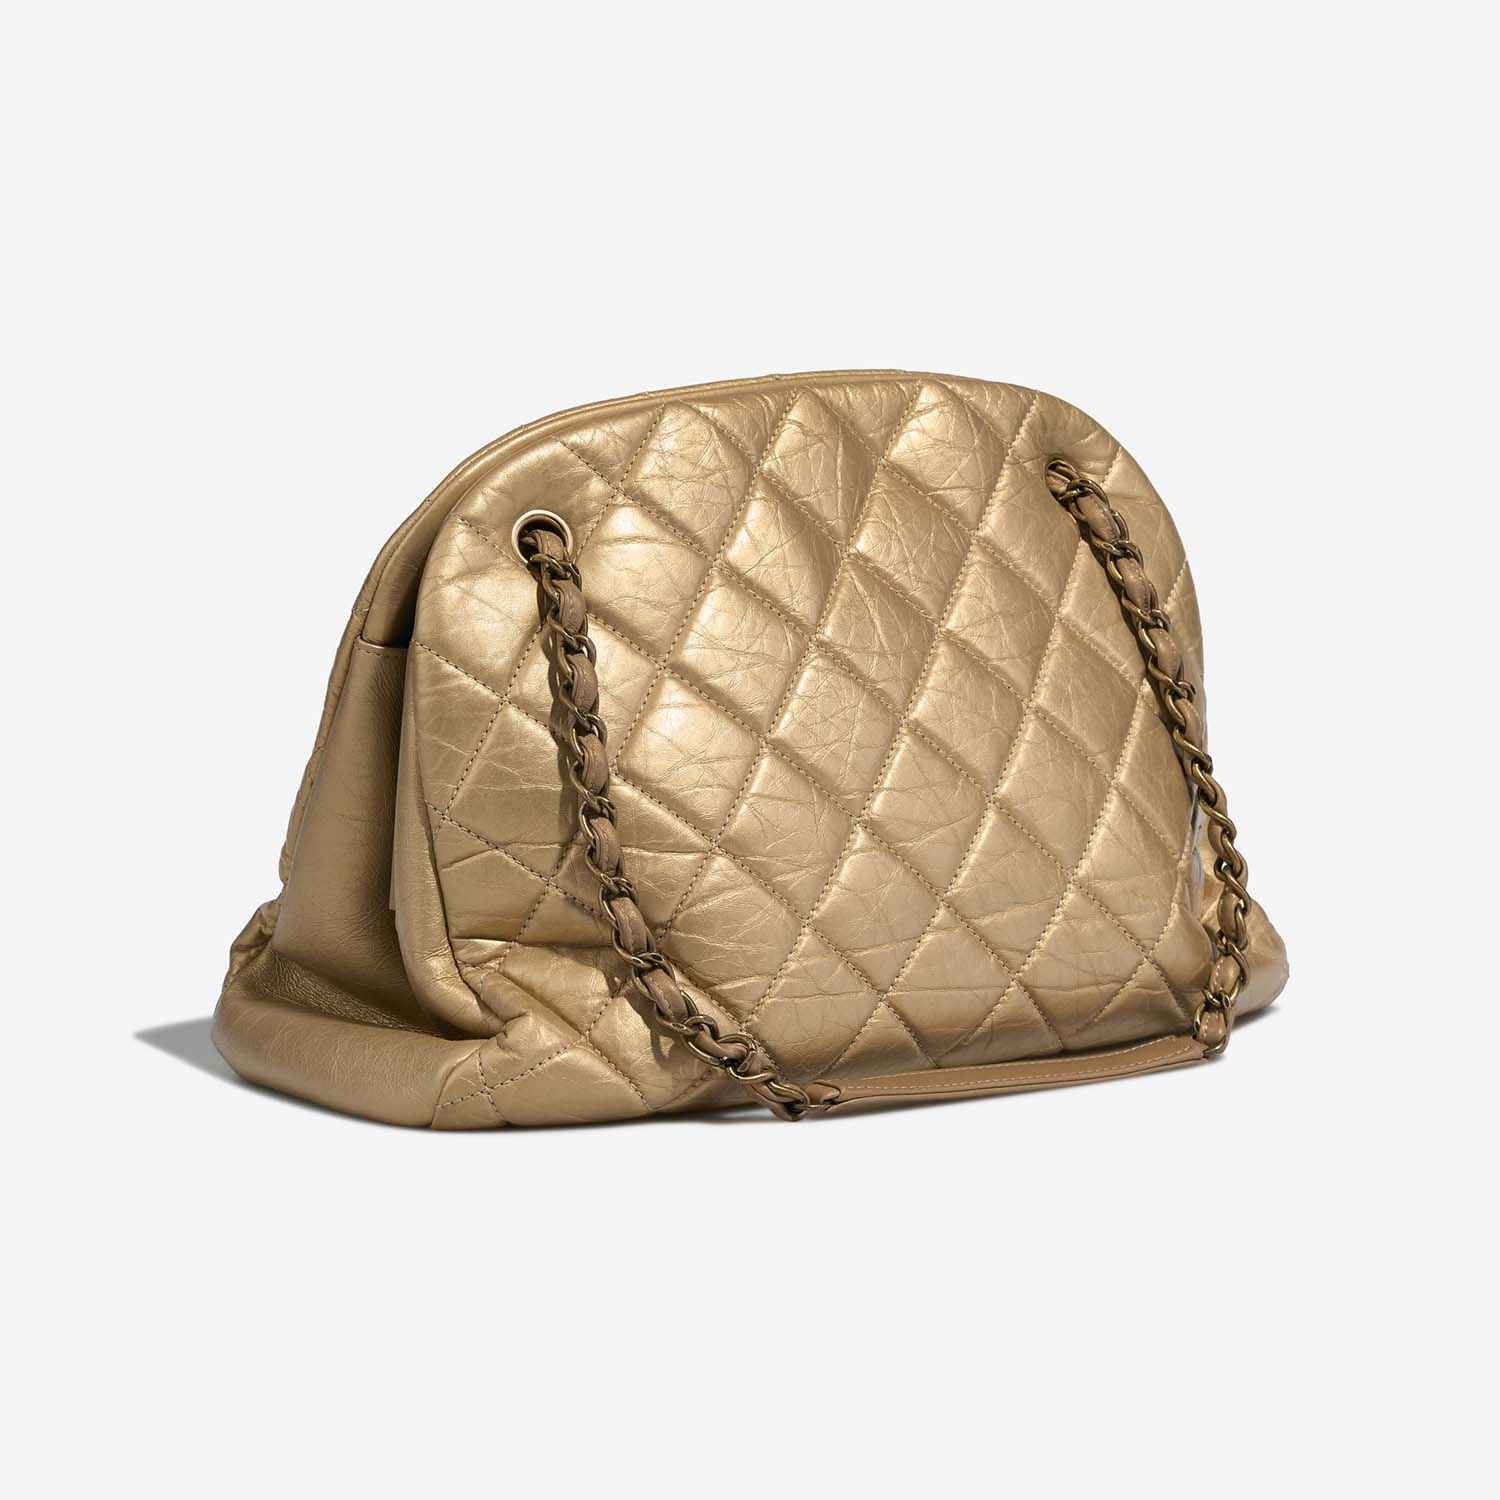 Chanel BowlingMademoiselle Large Gold Side Back | Sell your designer bag on Saclab.com